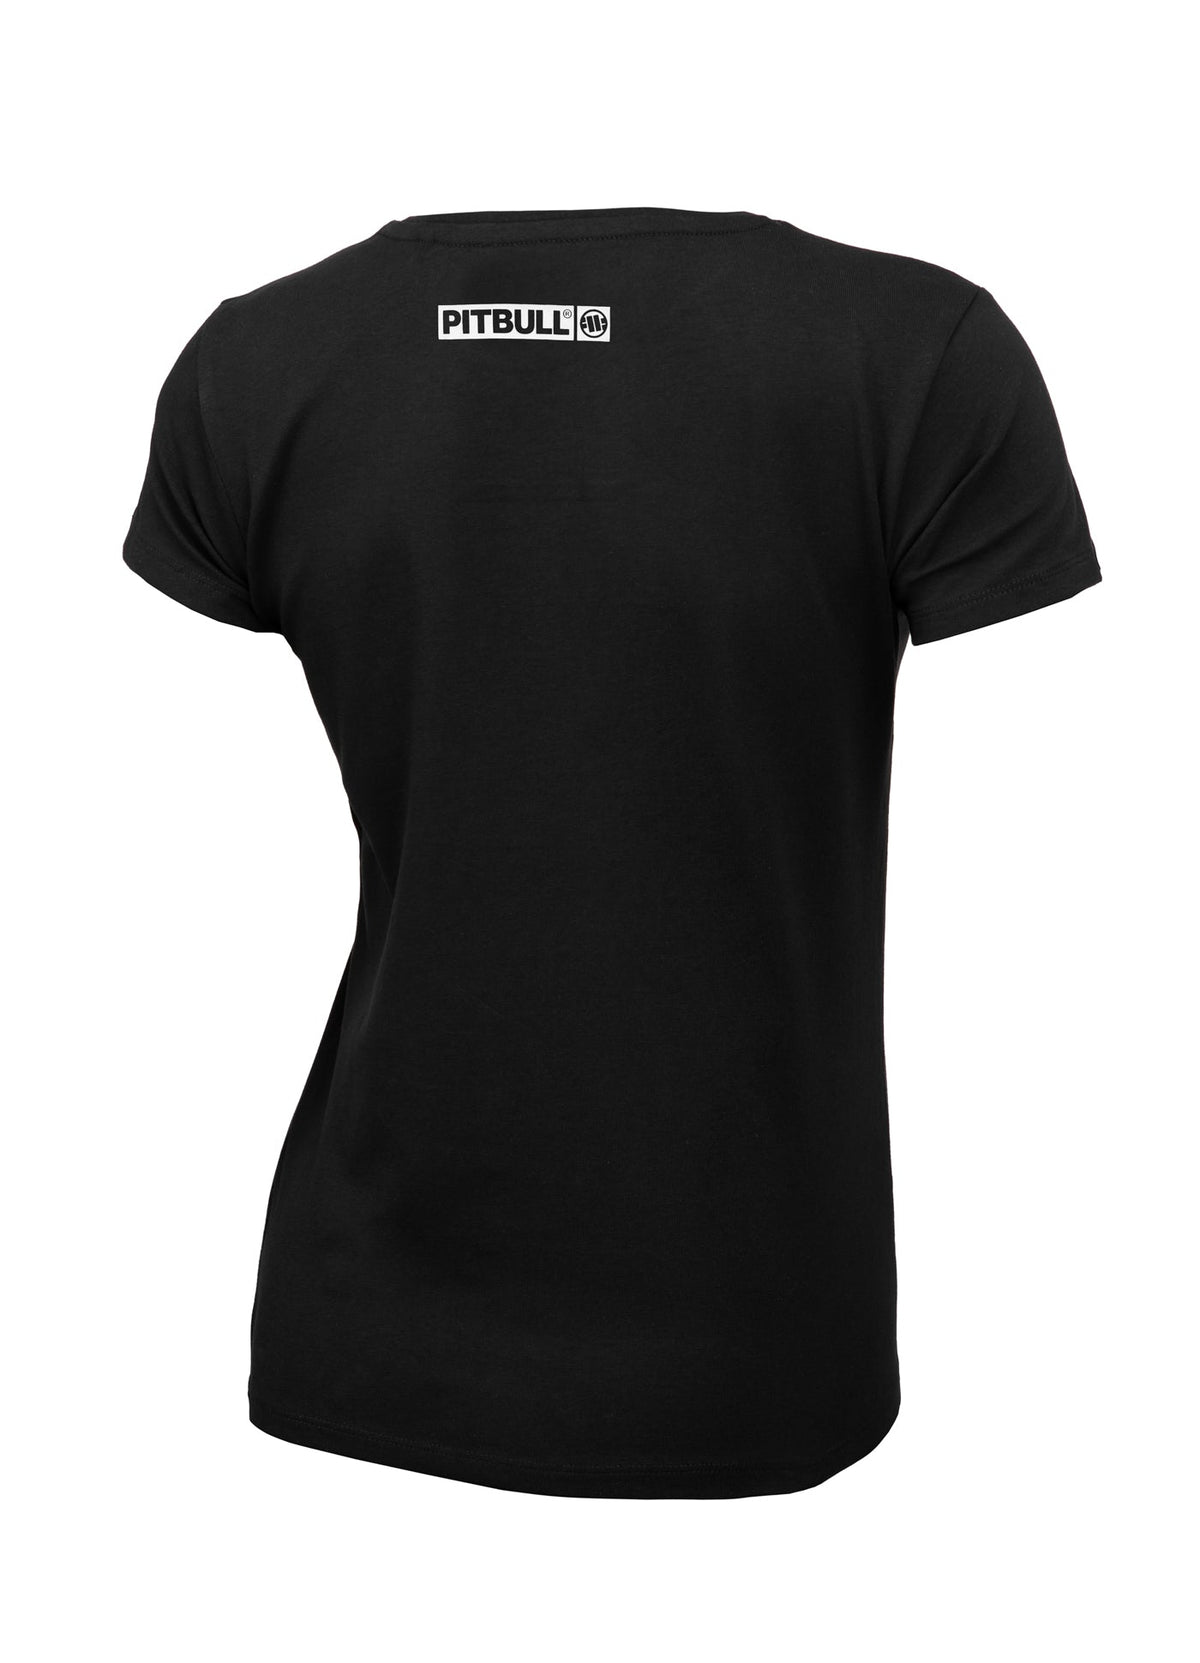 HILLTOP REGULAR Black T-shirt